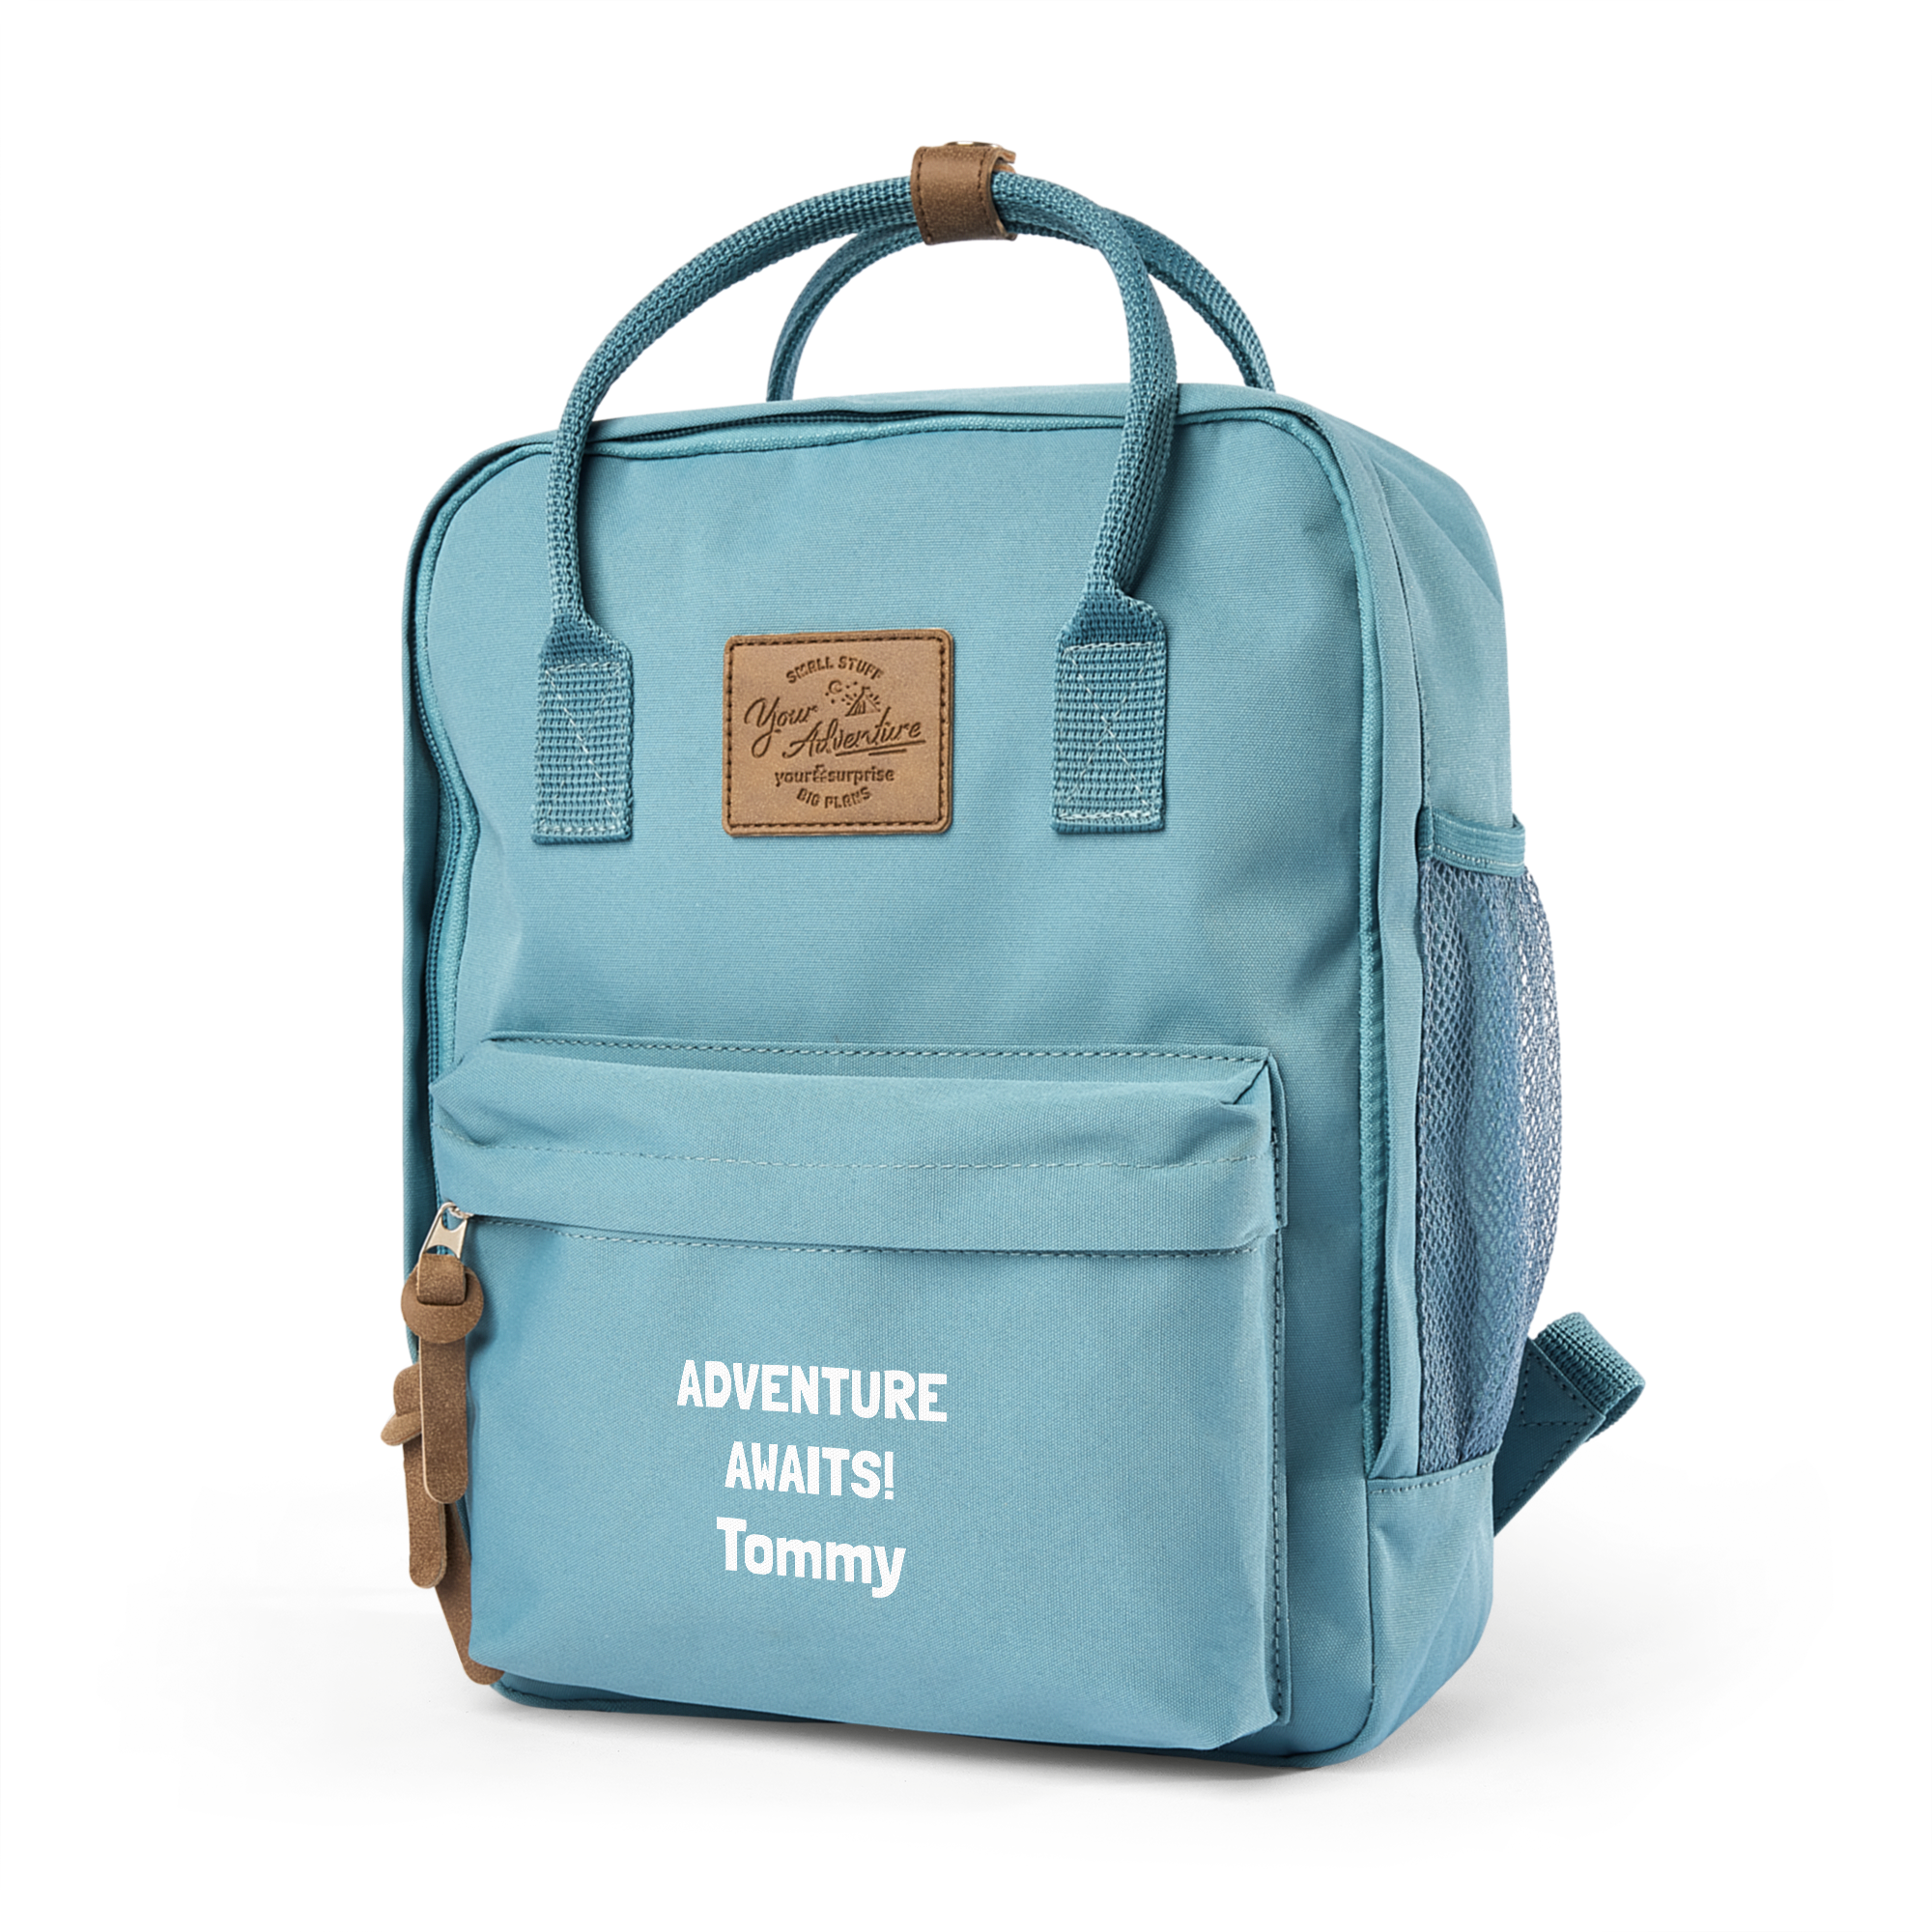 Personalised backpack - Children - Blue